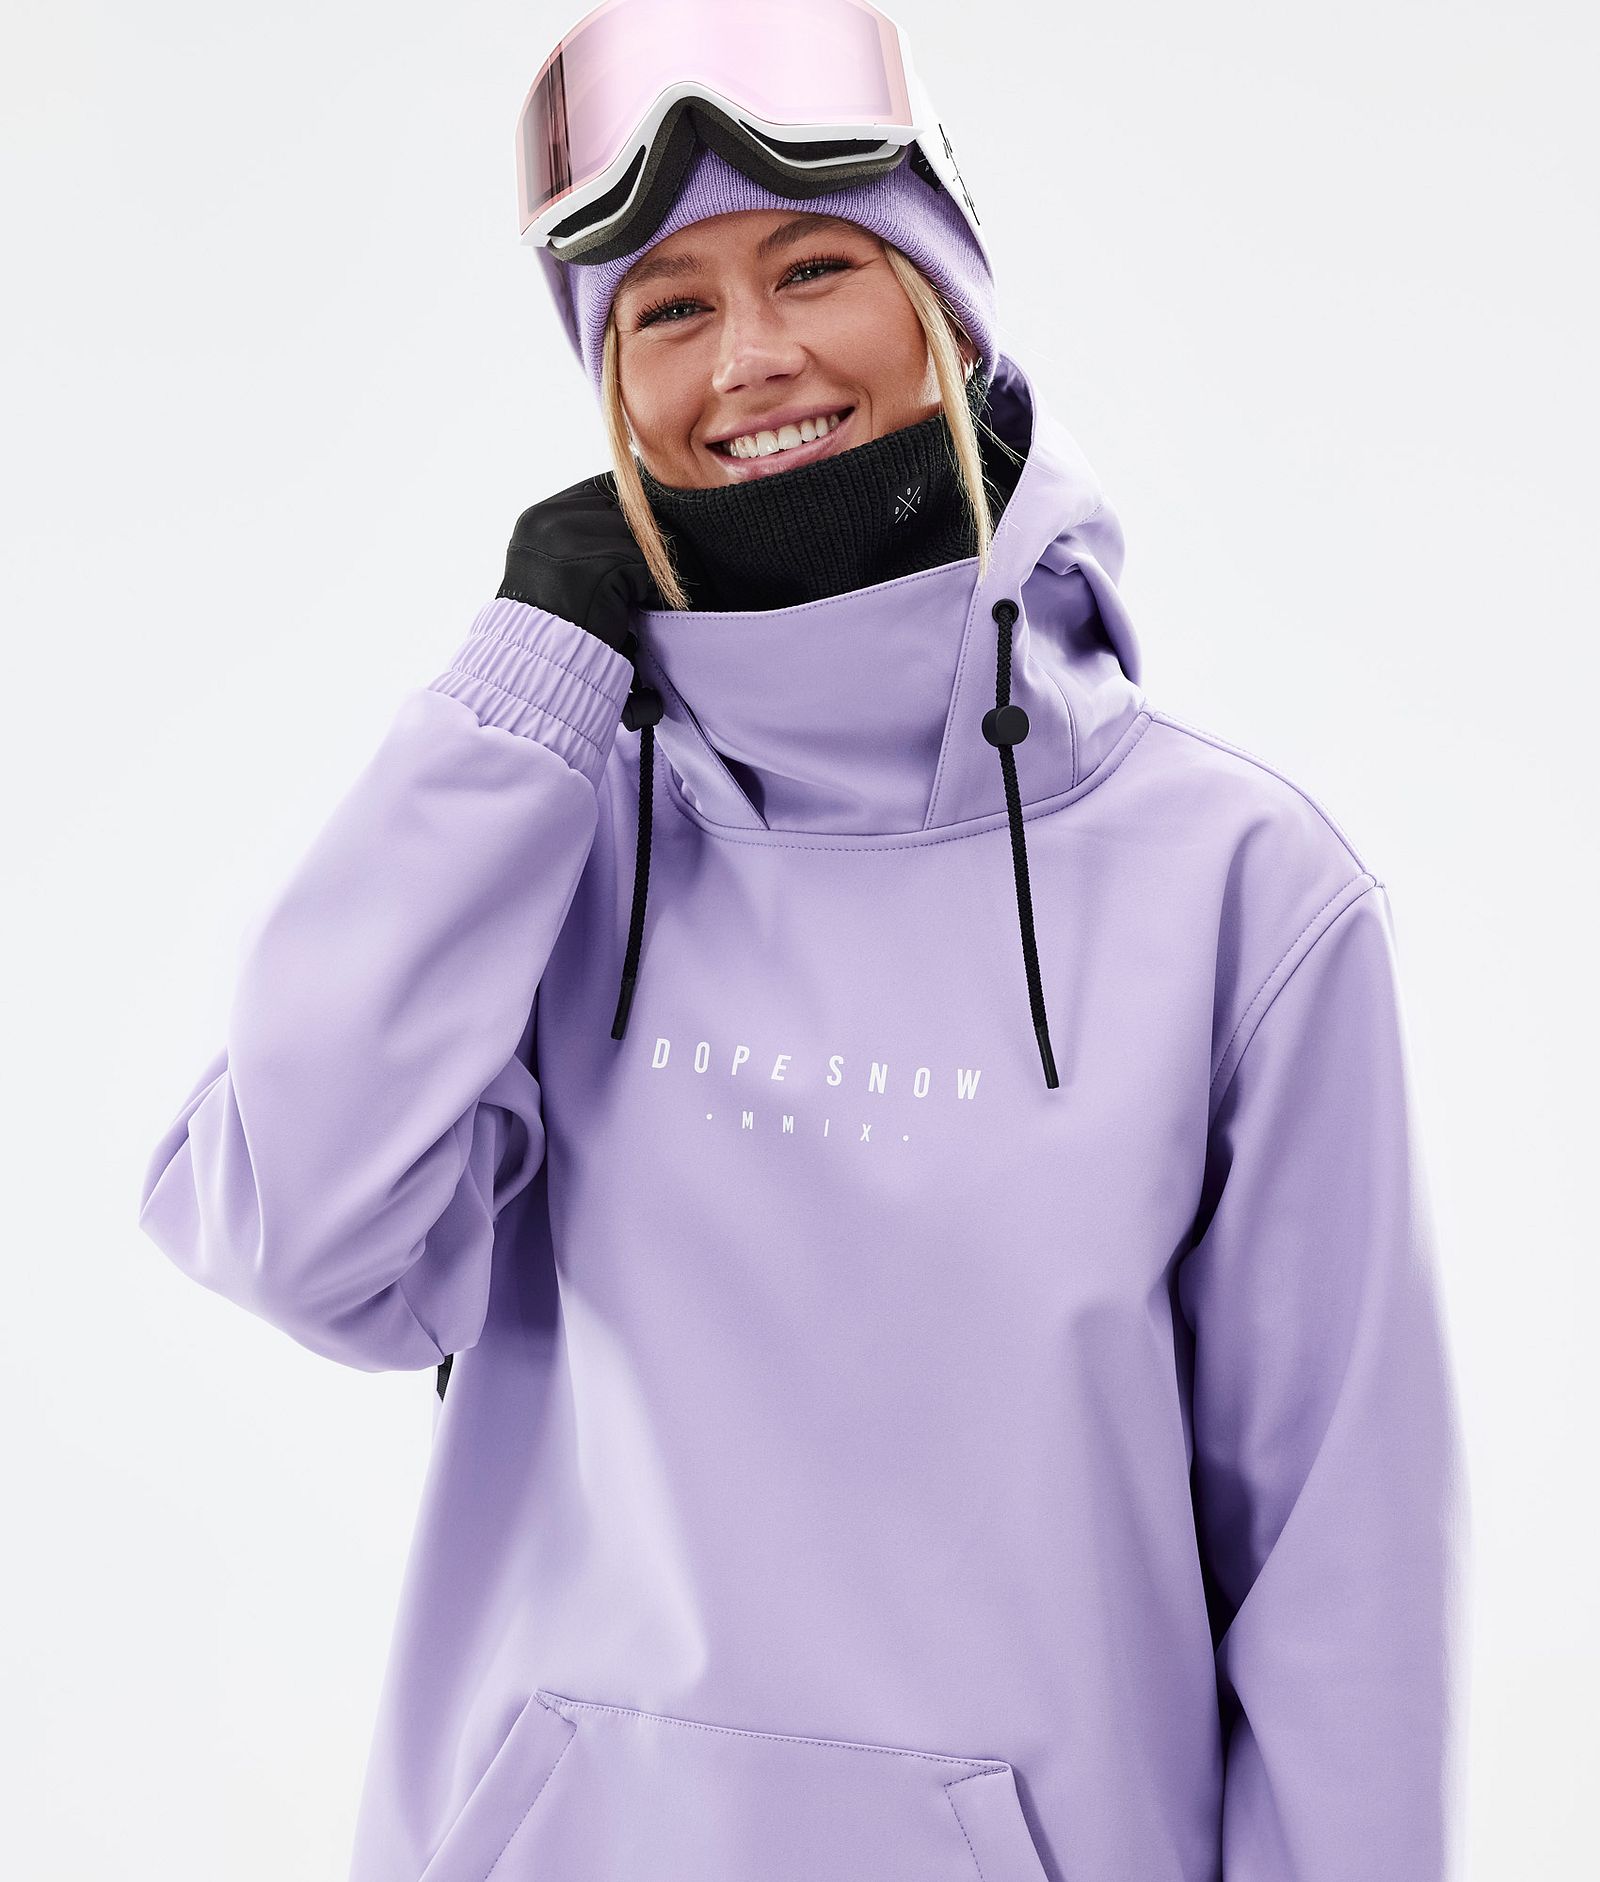 Dope Yeti W 2022 Veste Snowboard Femme Range Faded Violet Renewed